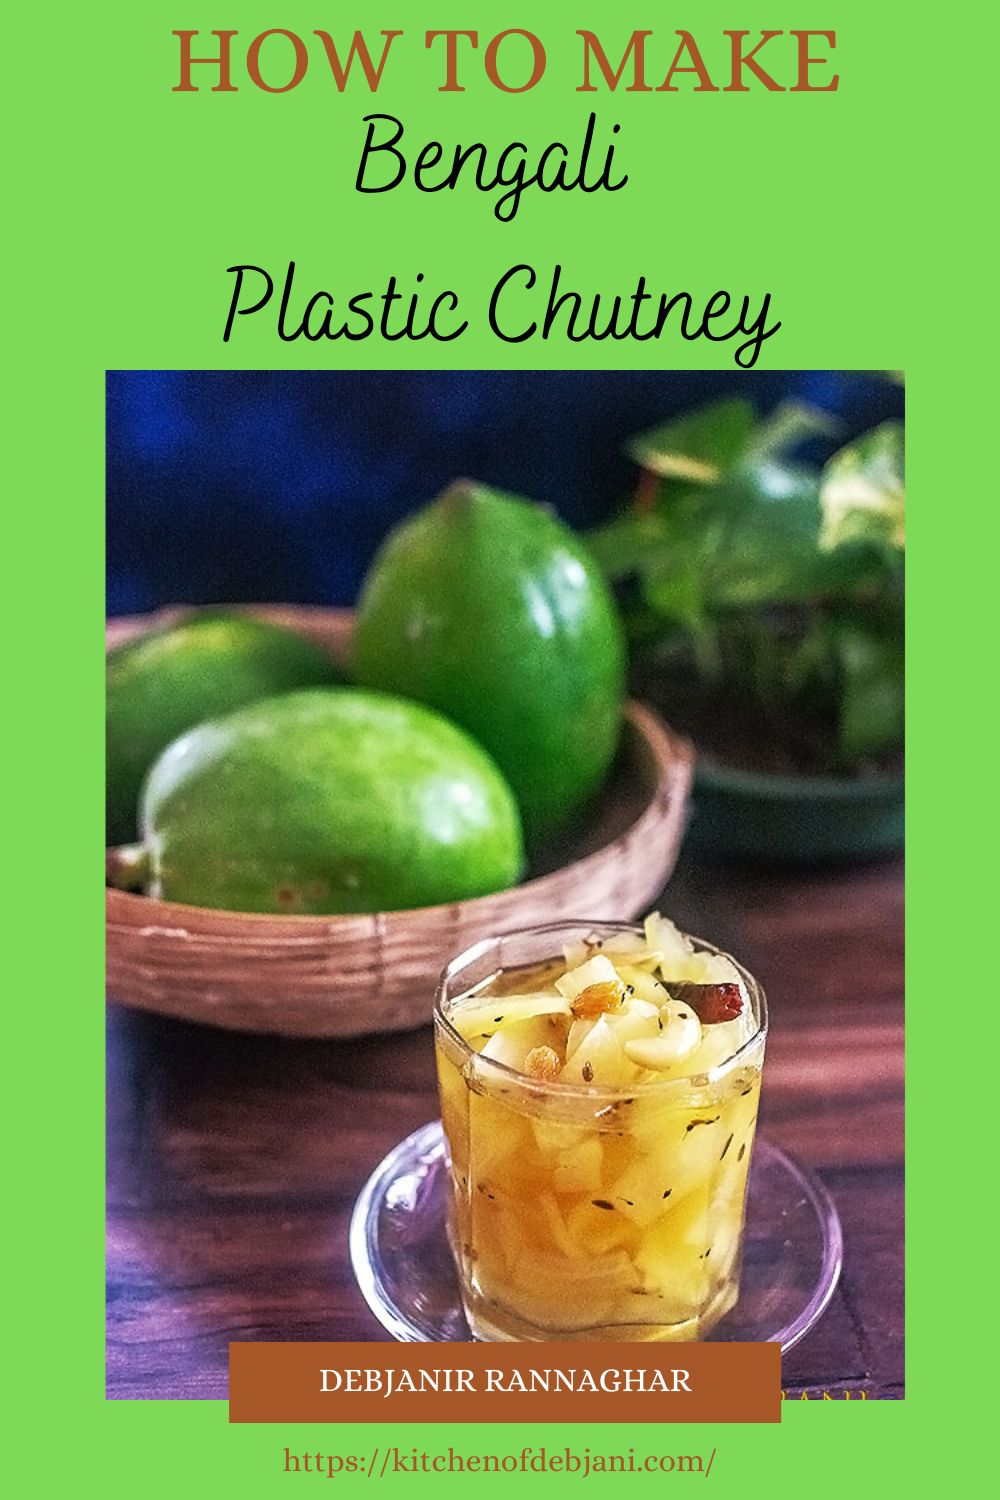 %how to make bengali papaya chutney Bengali Plastic Chutney Recipe Pinterest Pin